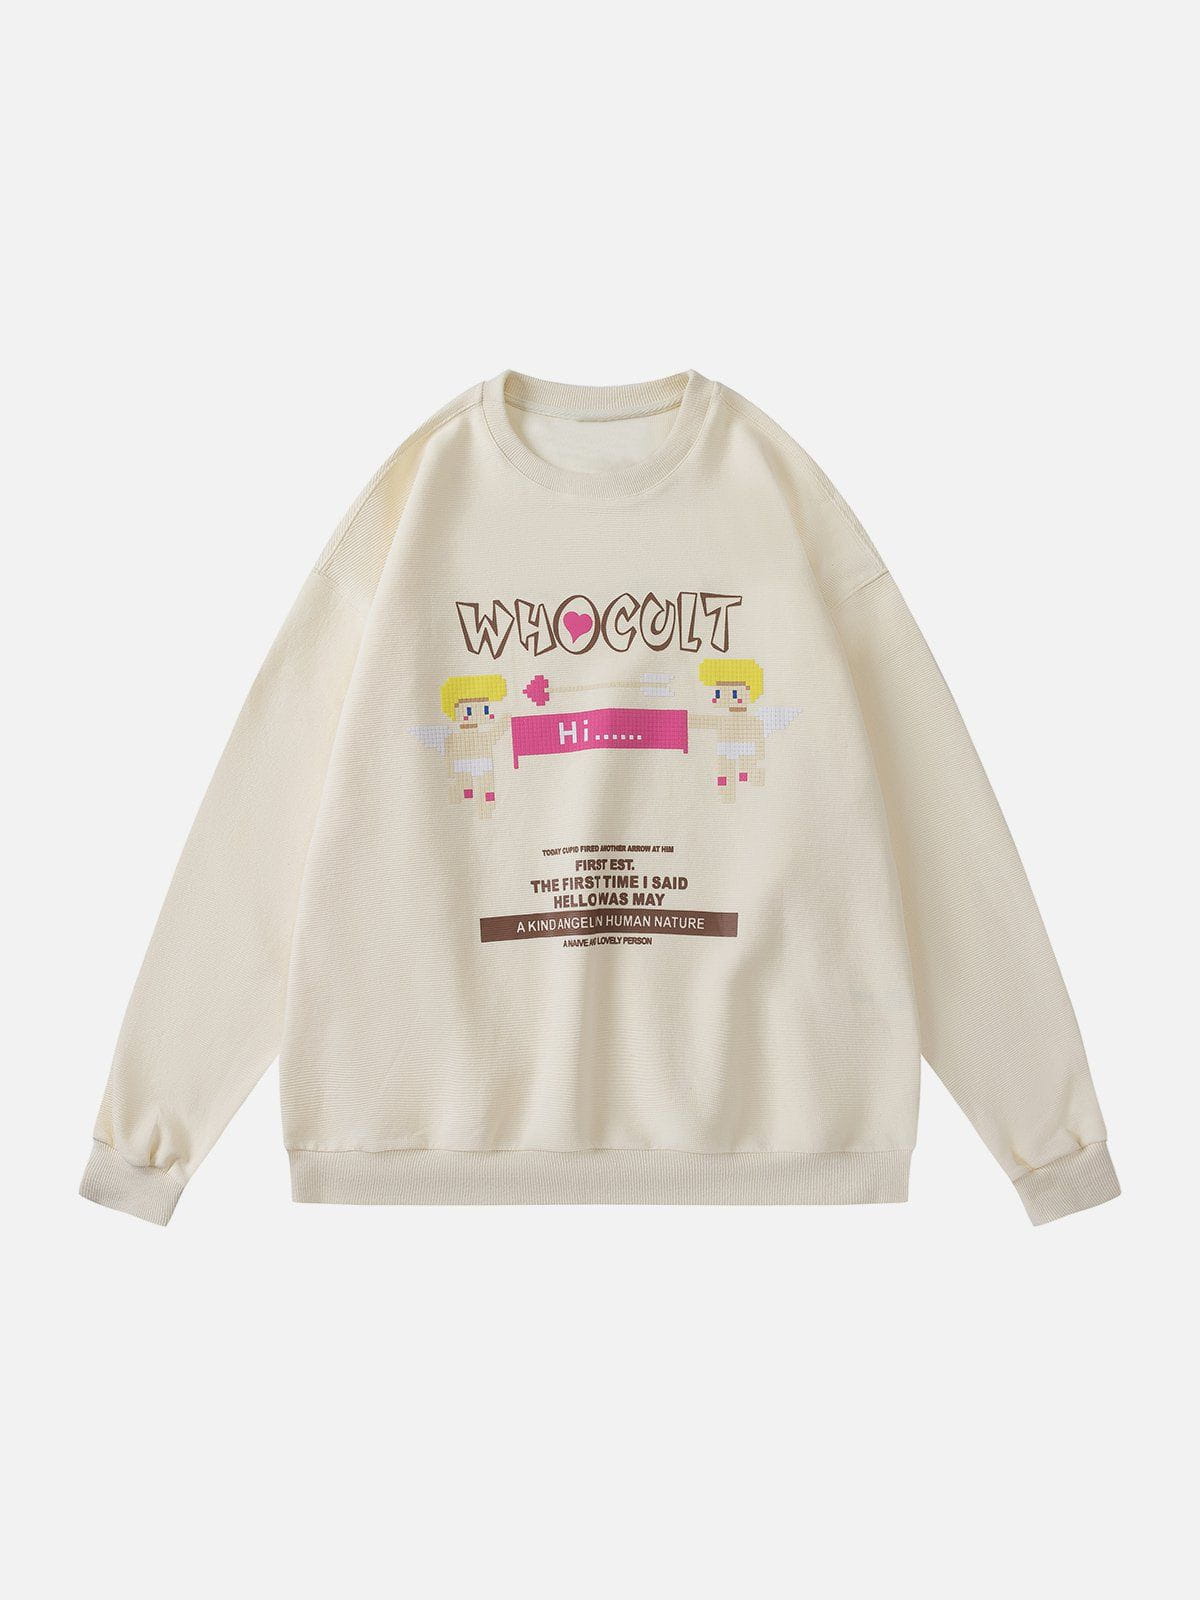 Eprezzy® - Letter Printed Cute Sweatshirt Streetwear Fashion - eprezzy.com